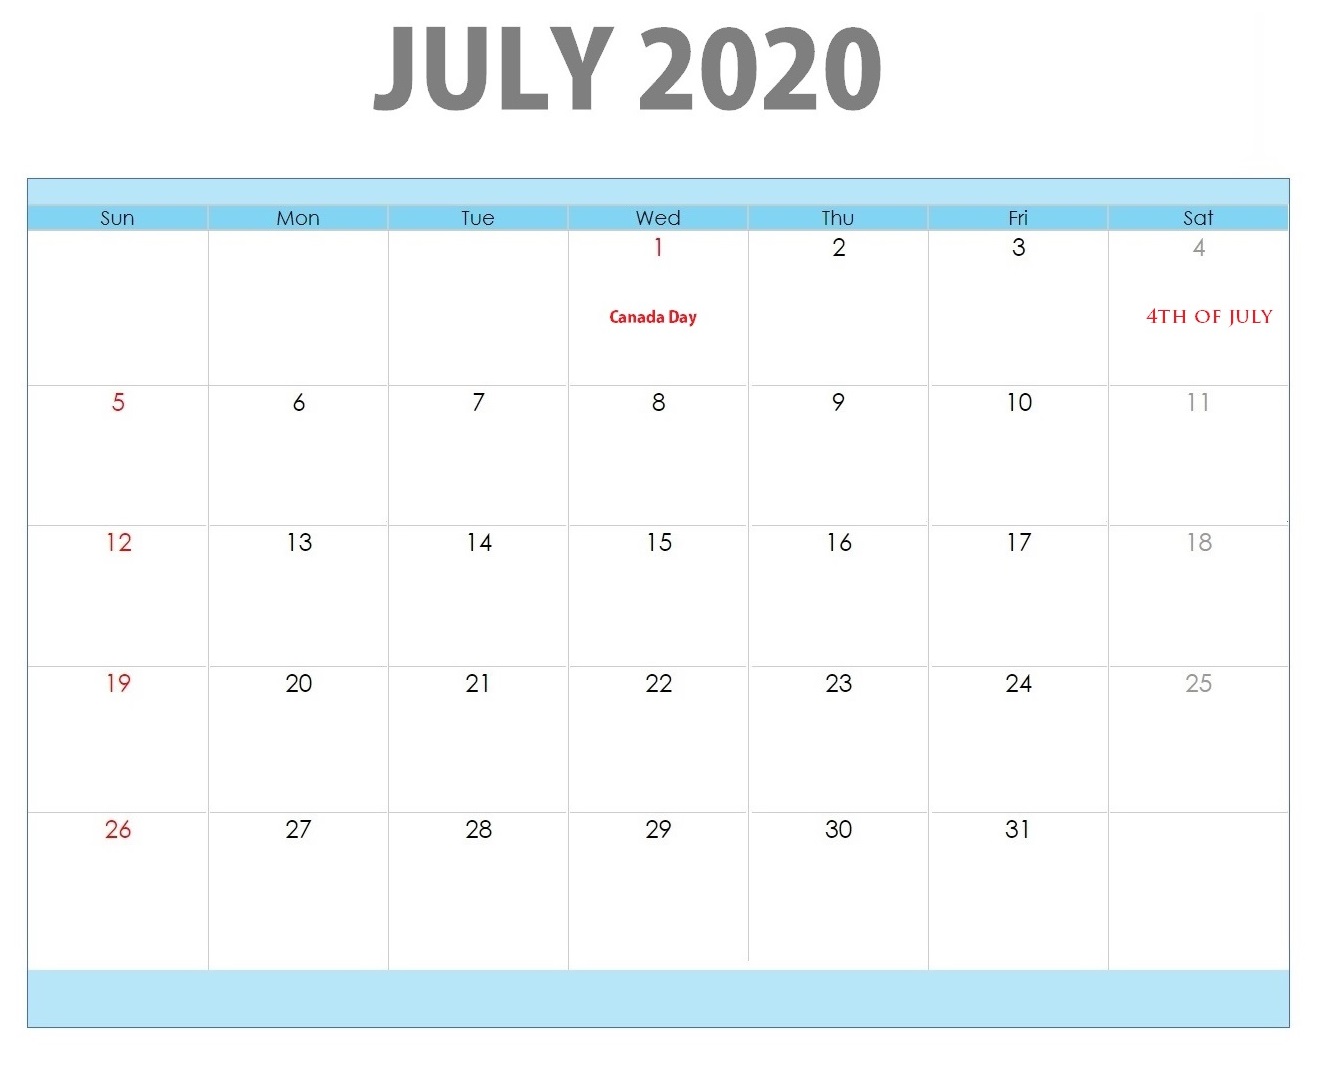 July 2020 Holidays Calendar